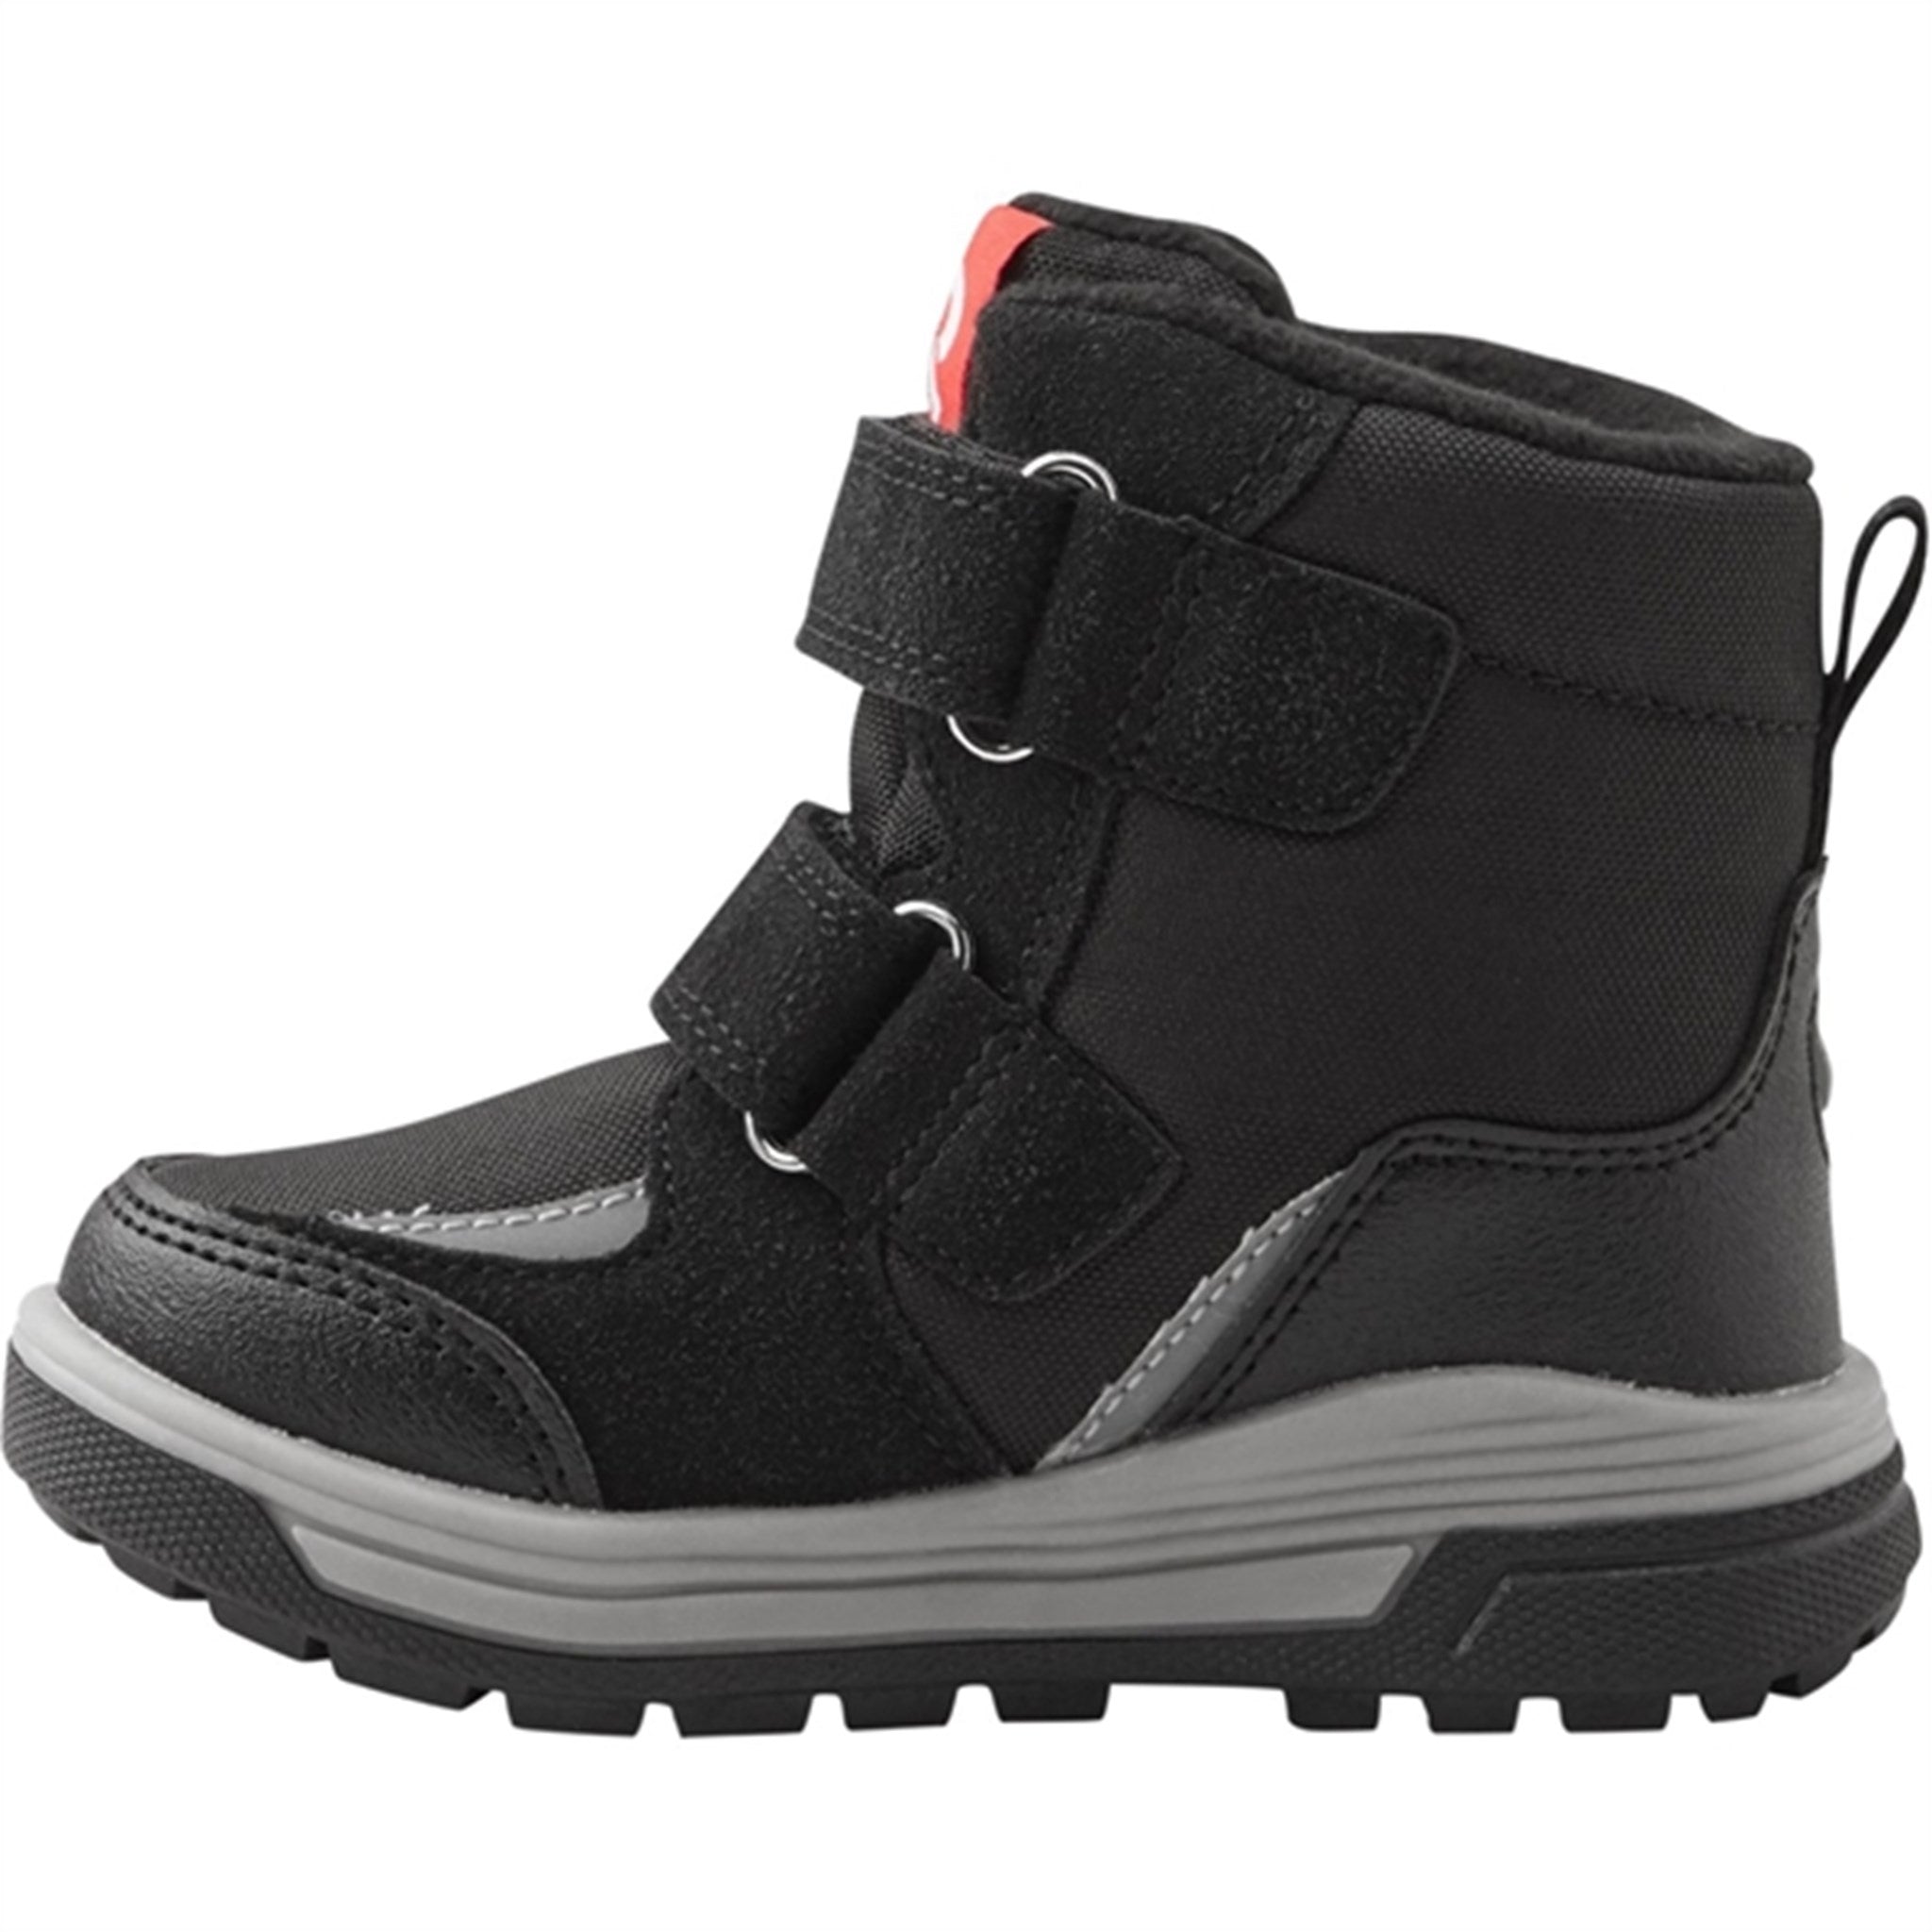 Reima Reimatec Waterproof Shoes Qing Black 8